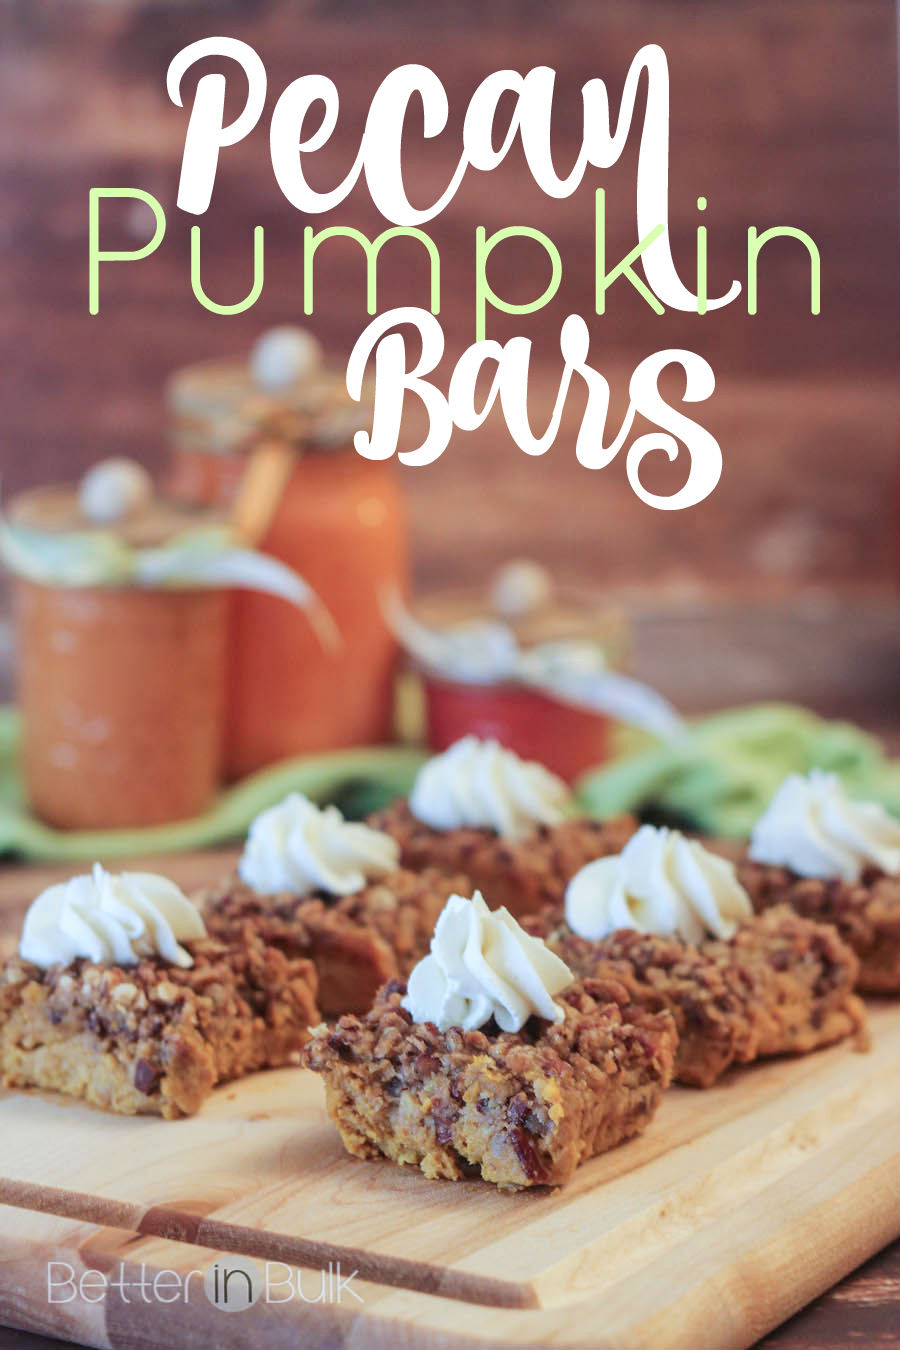 Pecan pumpkin bars recipe by Better in Bulk